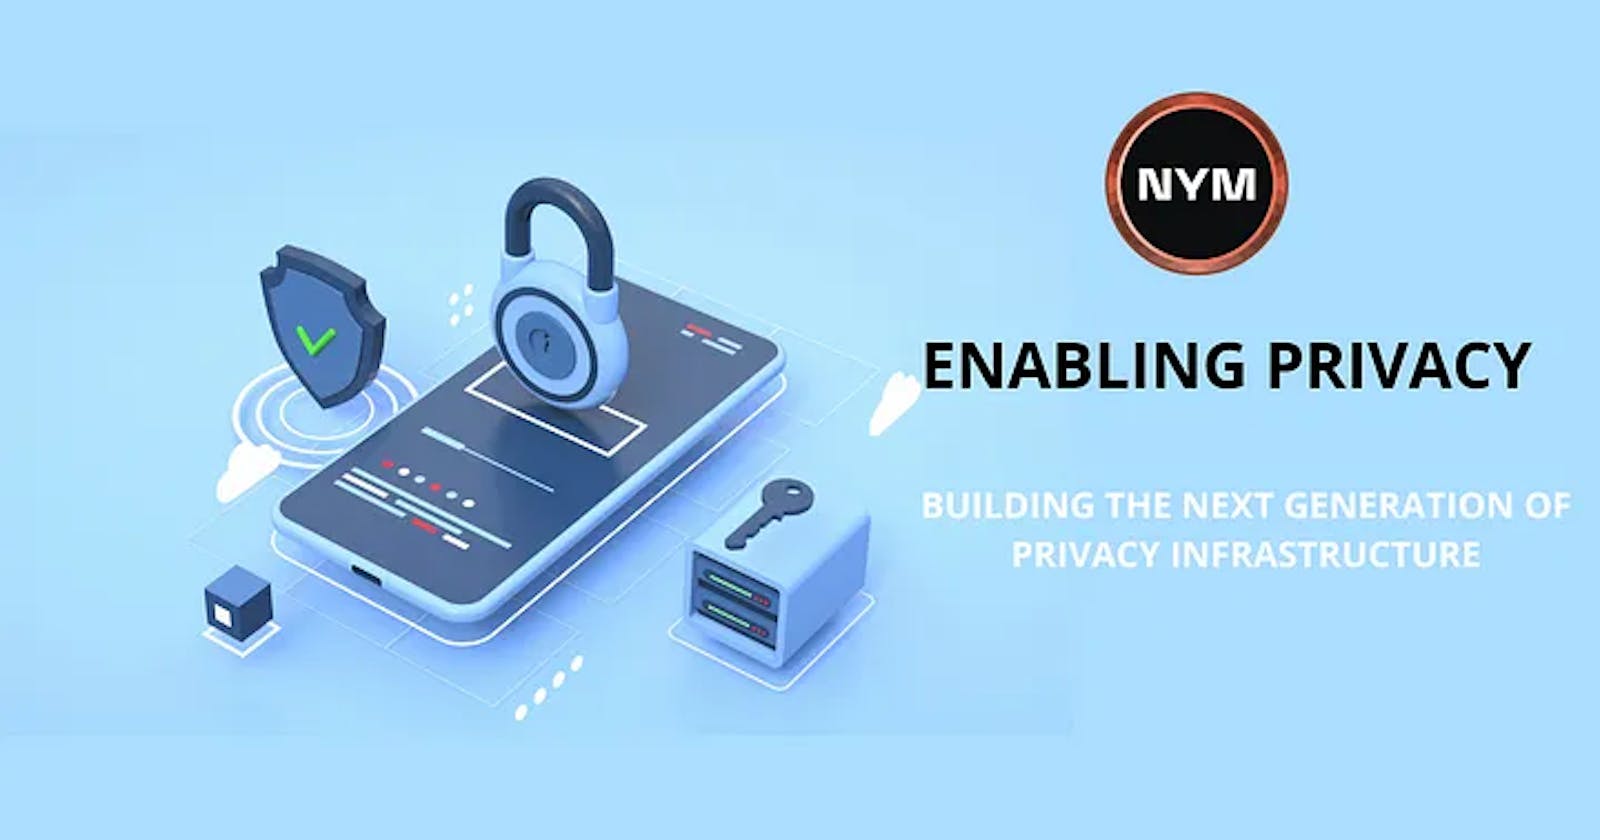 Nym: Revolutionizing Internet Privacy with Advanced Mixnet Technology